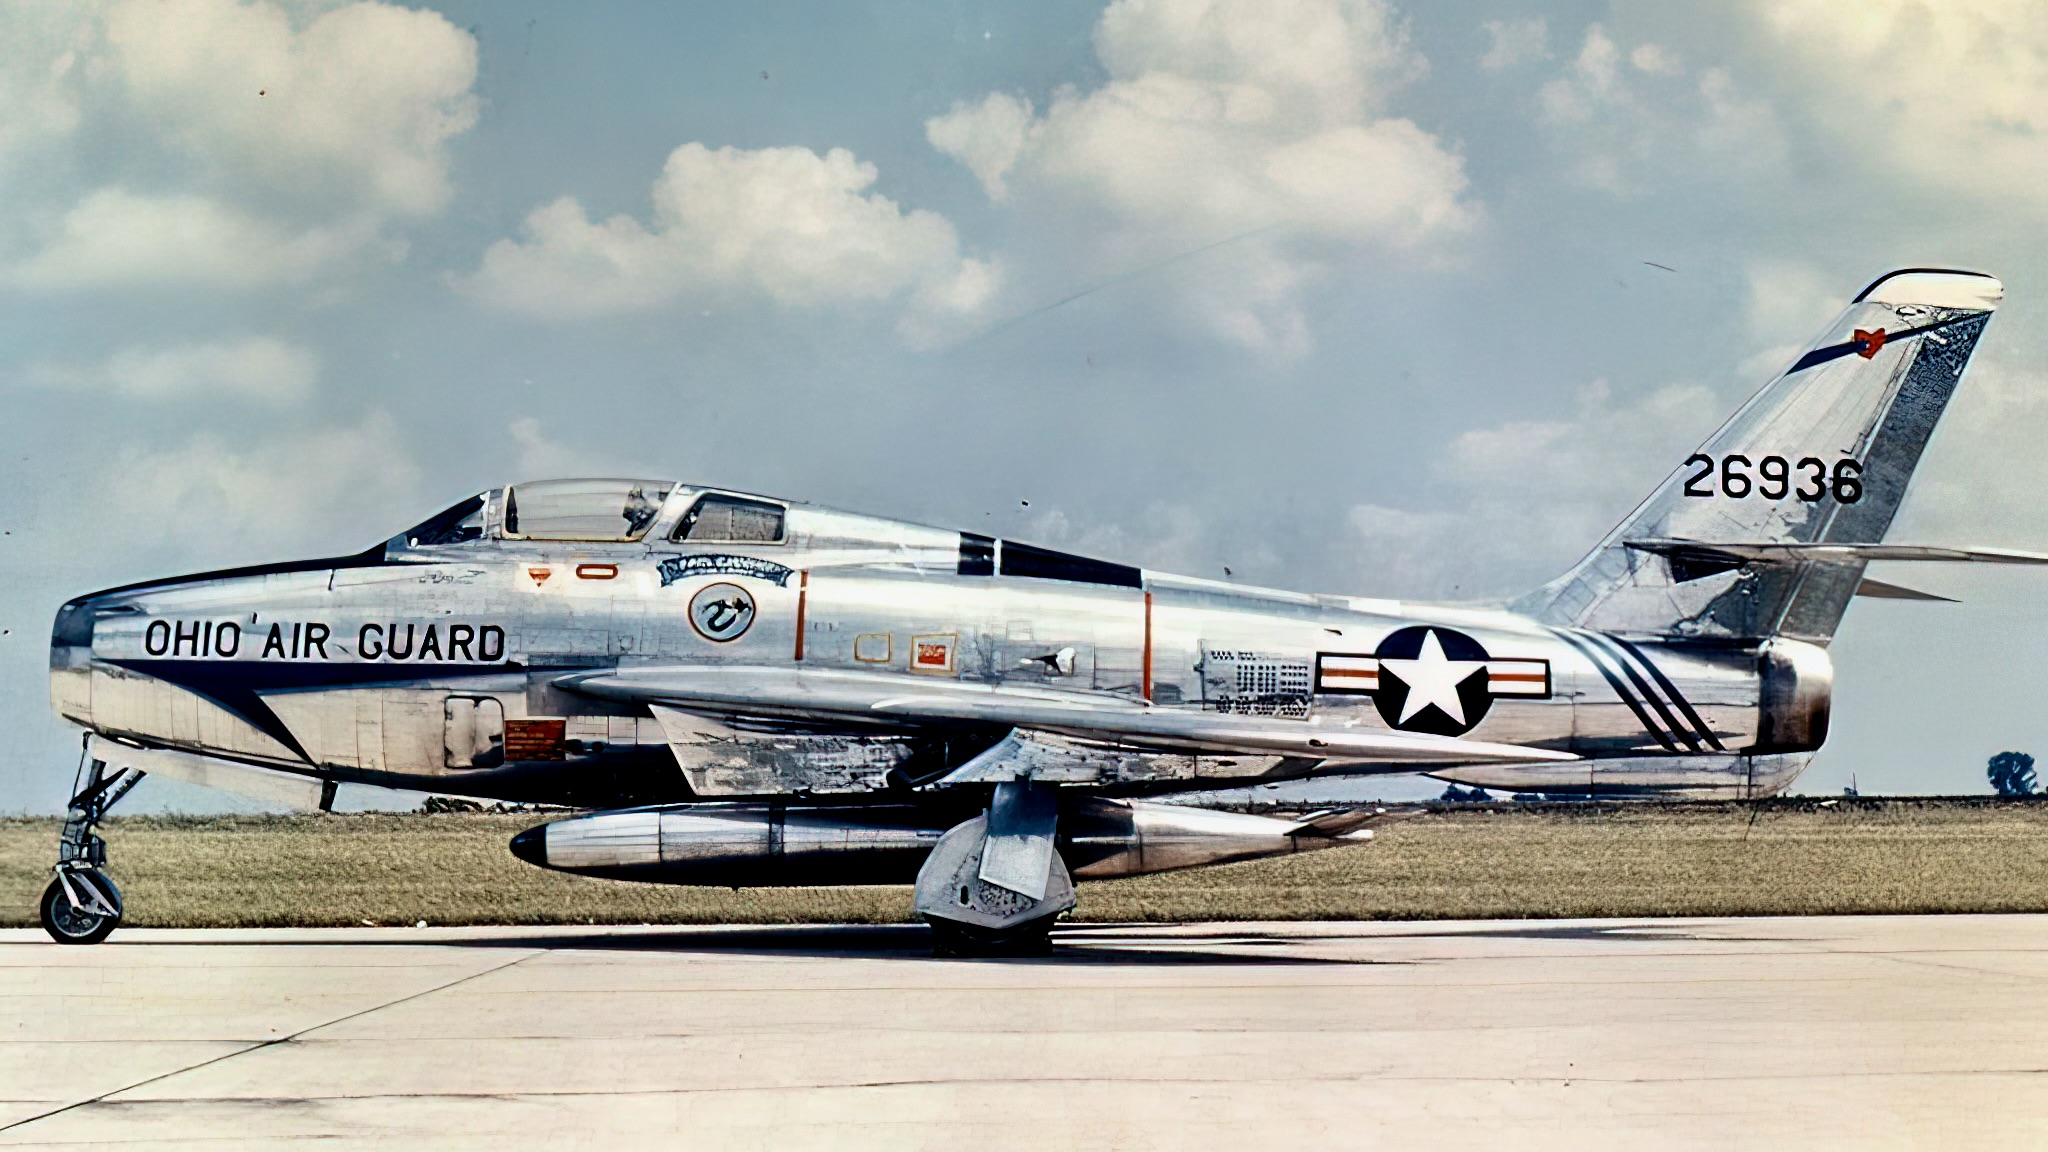 Republic F-84F-55-RE Thunderstreak (s/n 52-6936) of the Ohio Air National Guard